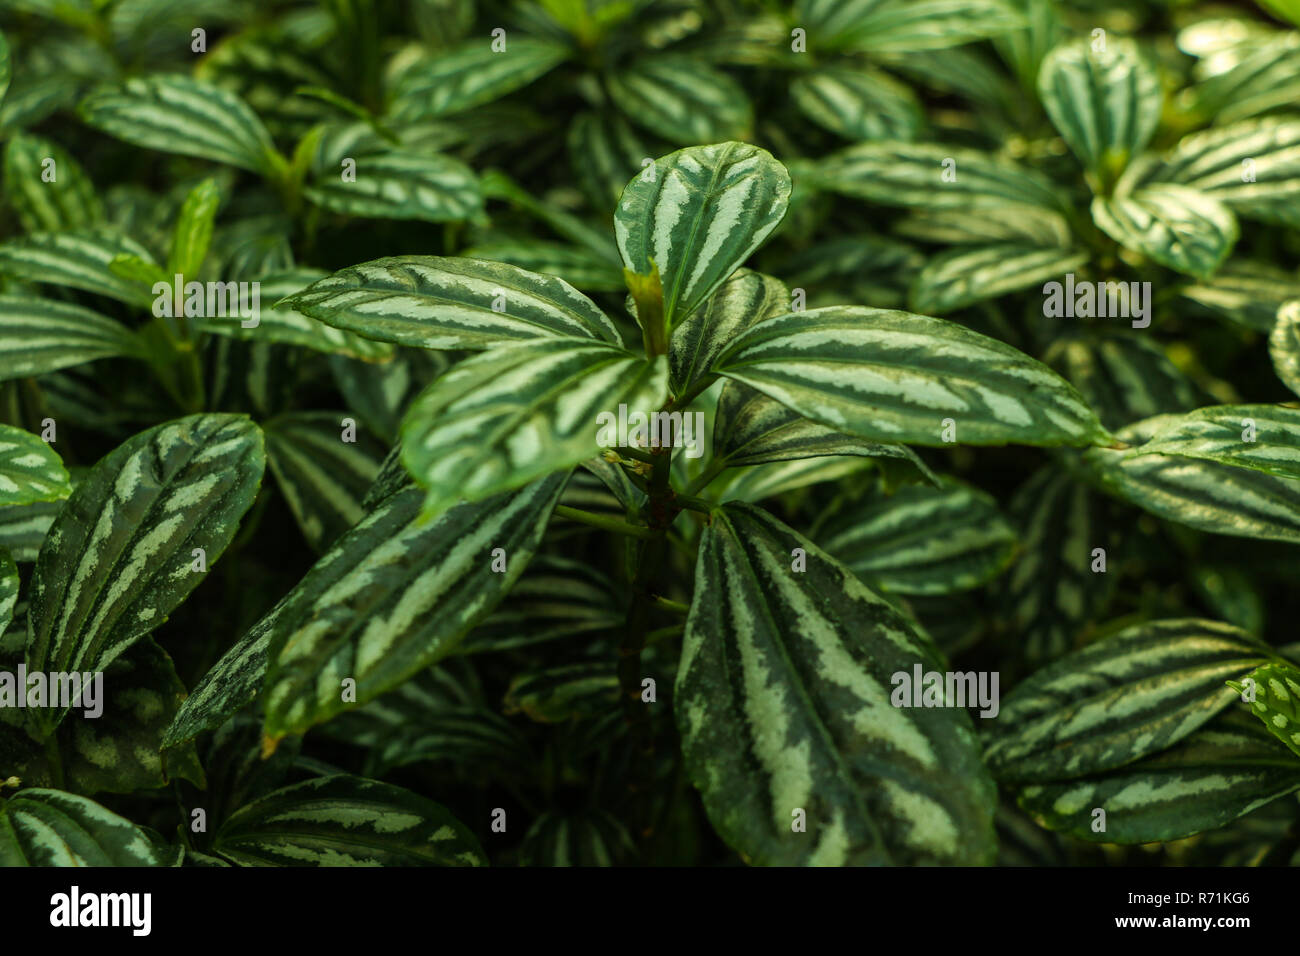 Lush foliage of decorative plant Pilea cadierei Alumnium Plant . Natural green background Stock Photo